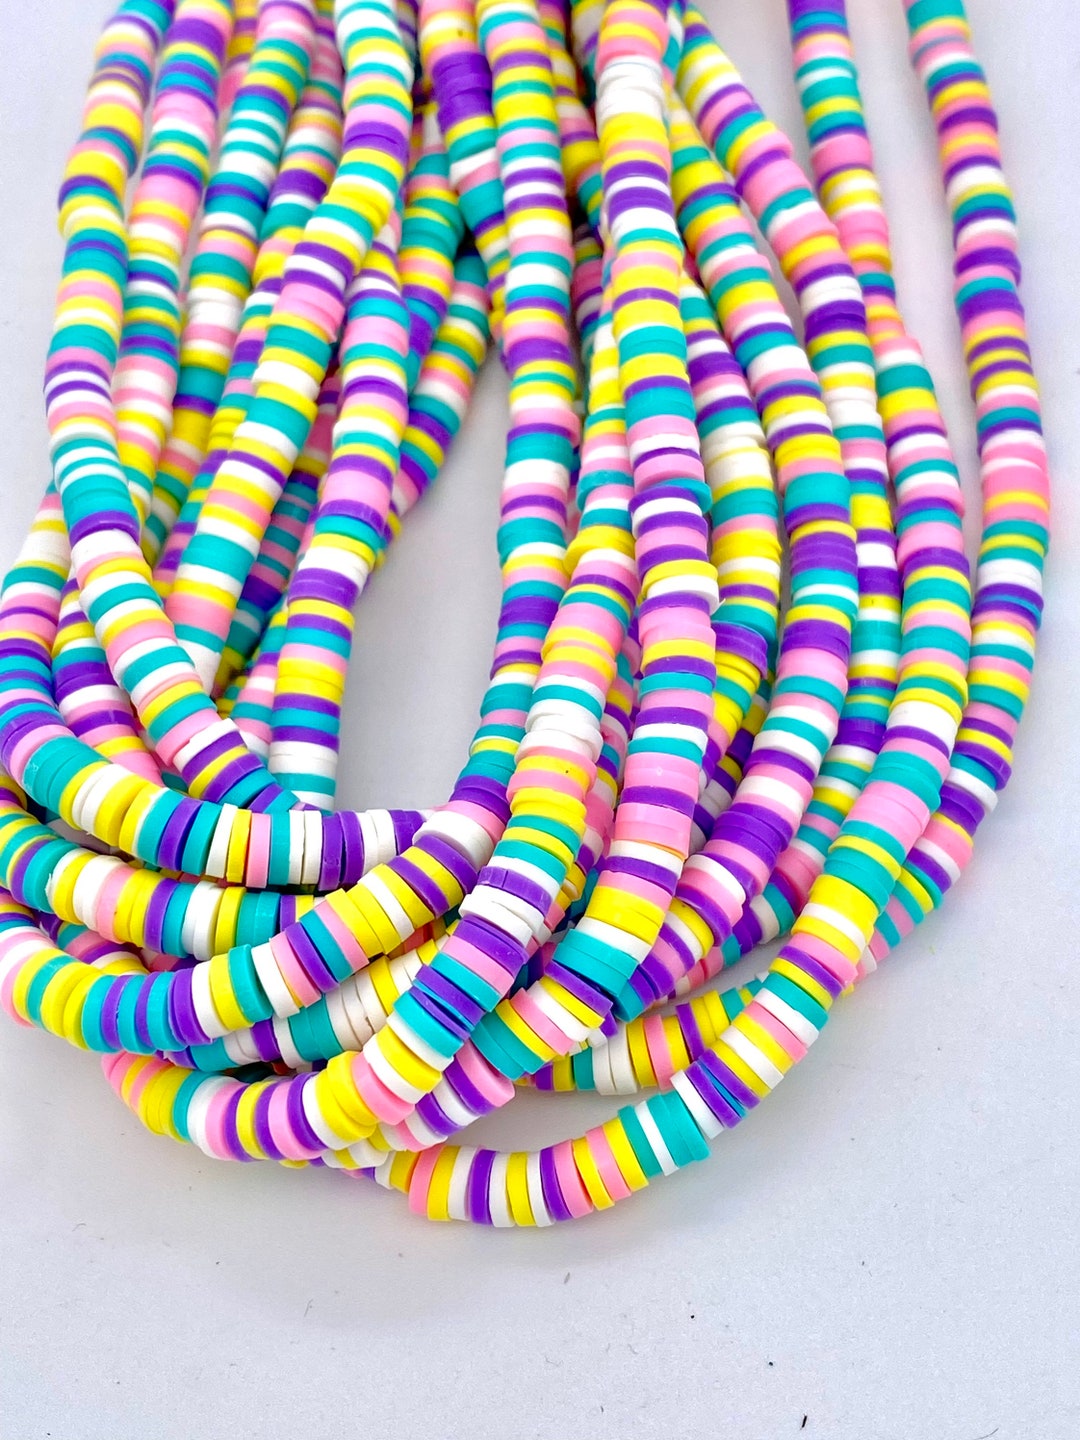 10mm Acrylic Star Beads, Metallic Rainbow Beads, Star Shaped Beads, Beads  for Kids, Craft Beads, 25 Beads per Pack 